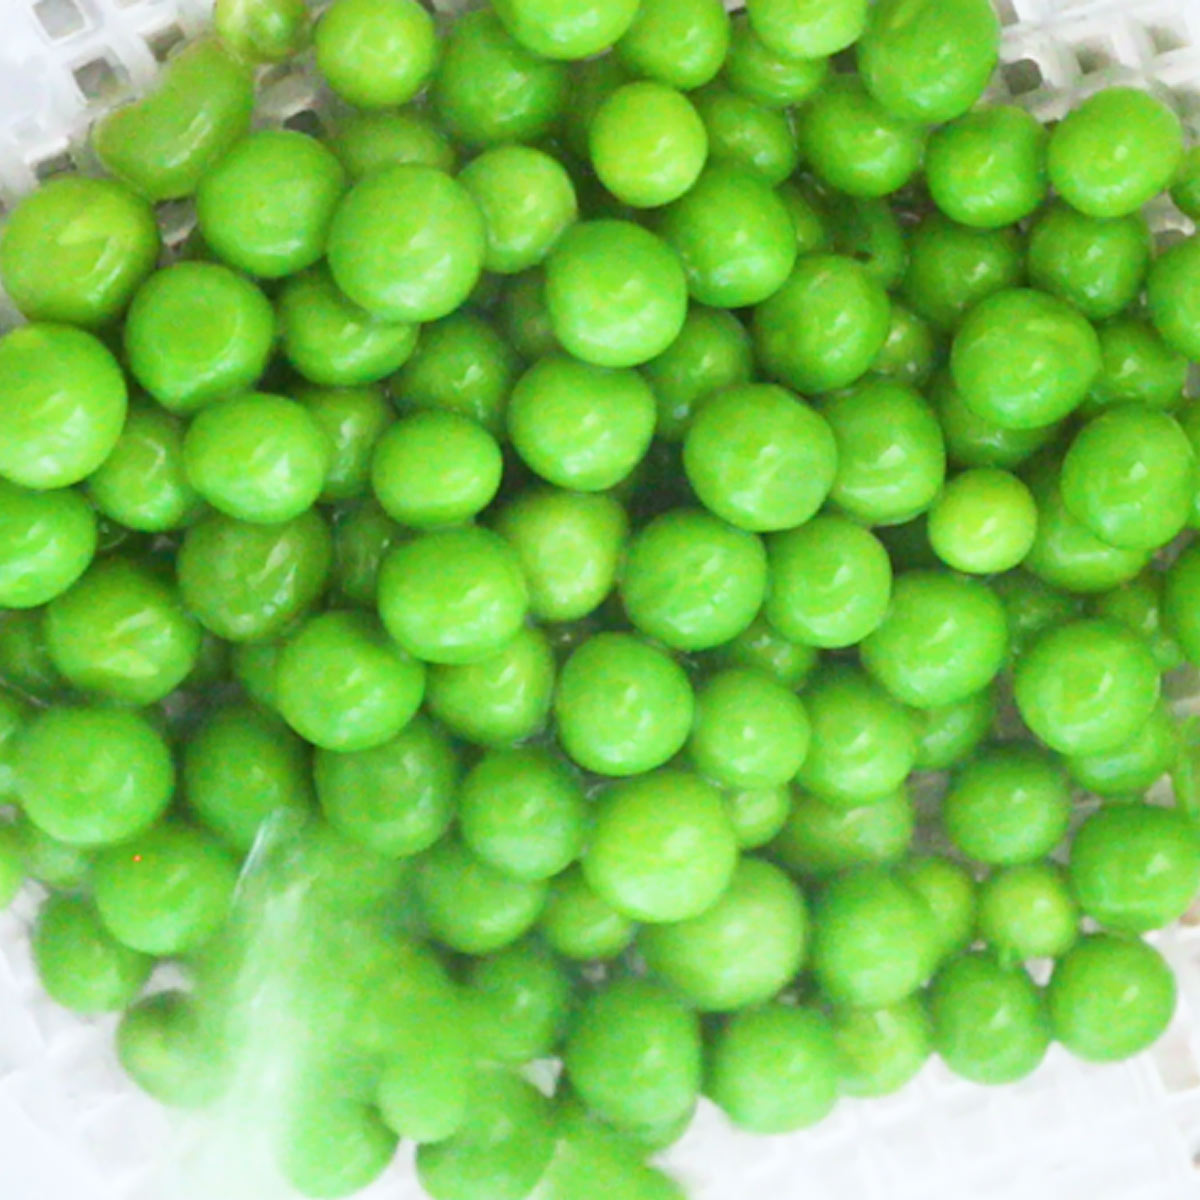 strain green peas